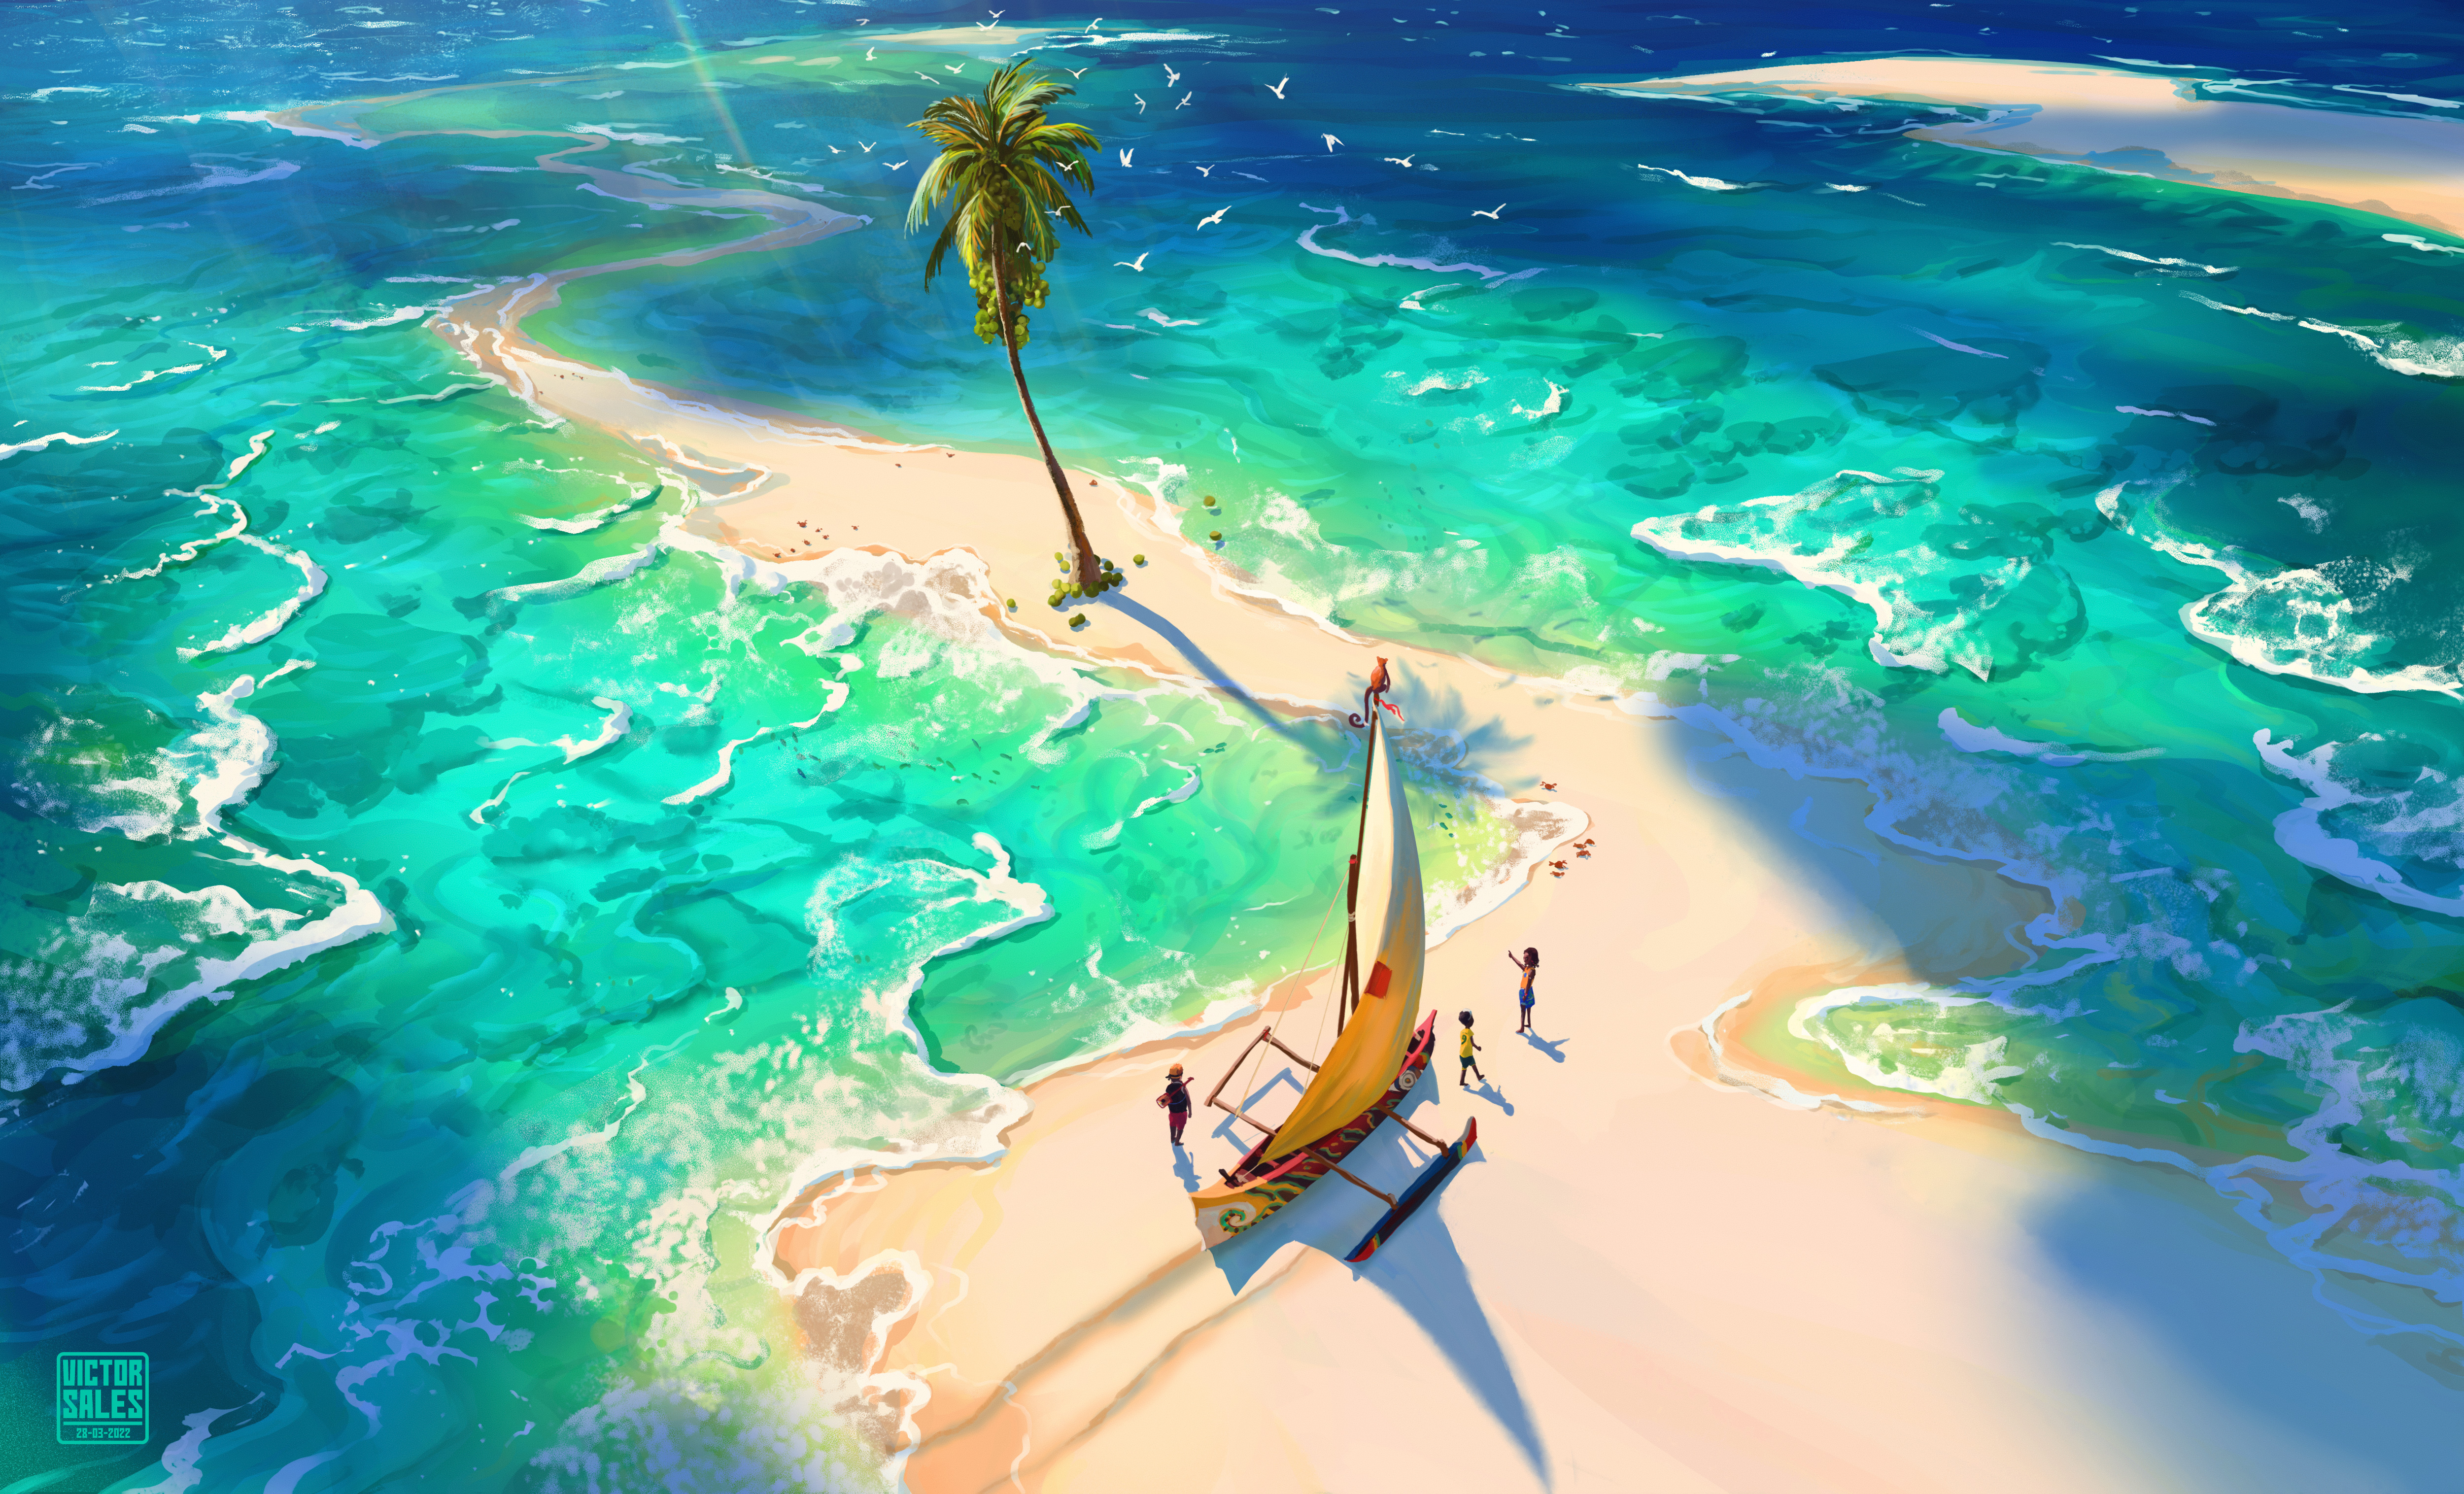 General 5000x3032 digital art artwork illustration landscape sea water palm trees sand Victor Sales island